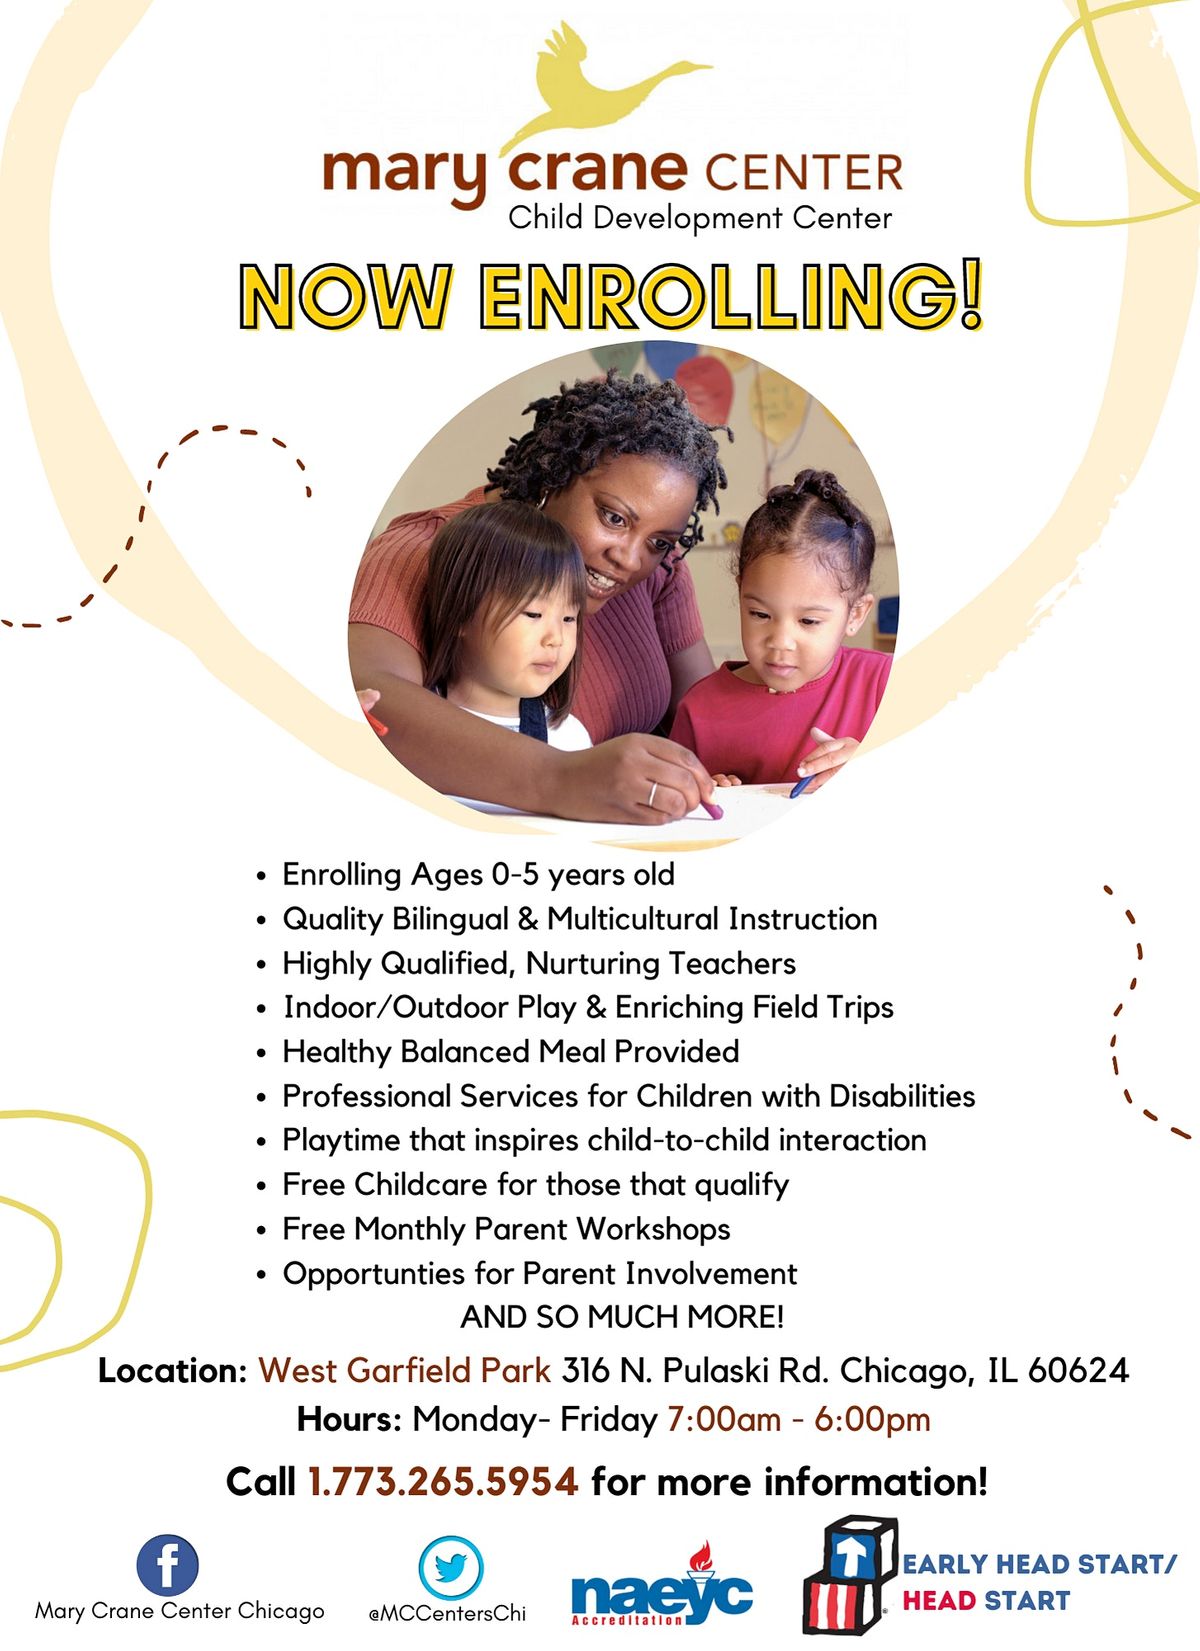 Mary Crane Center Early Head Start & Head Start Program - NOW ENROLLING!